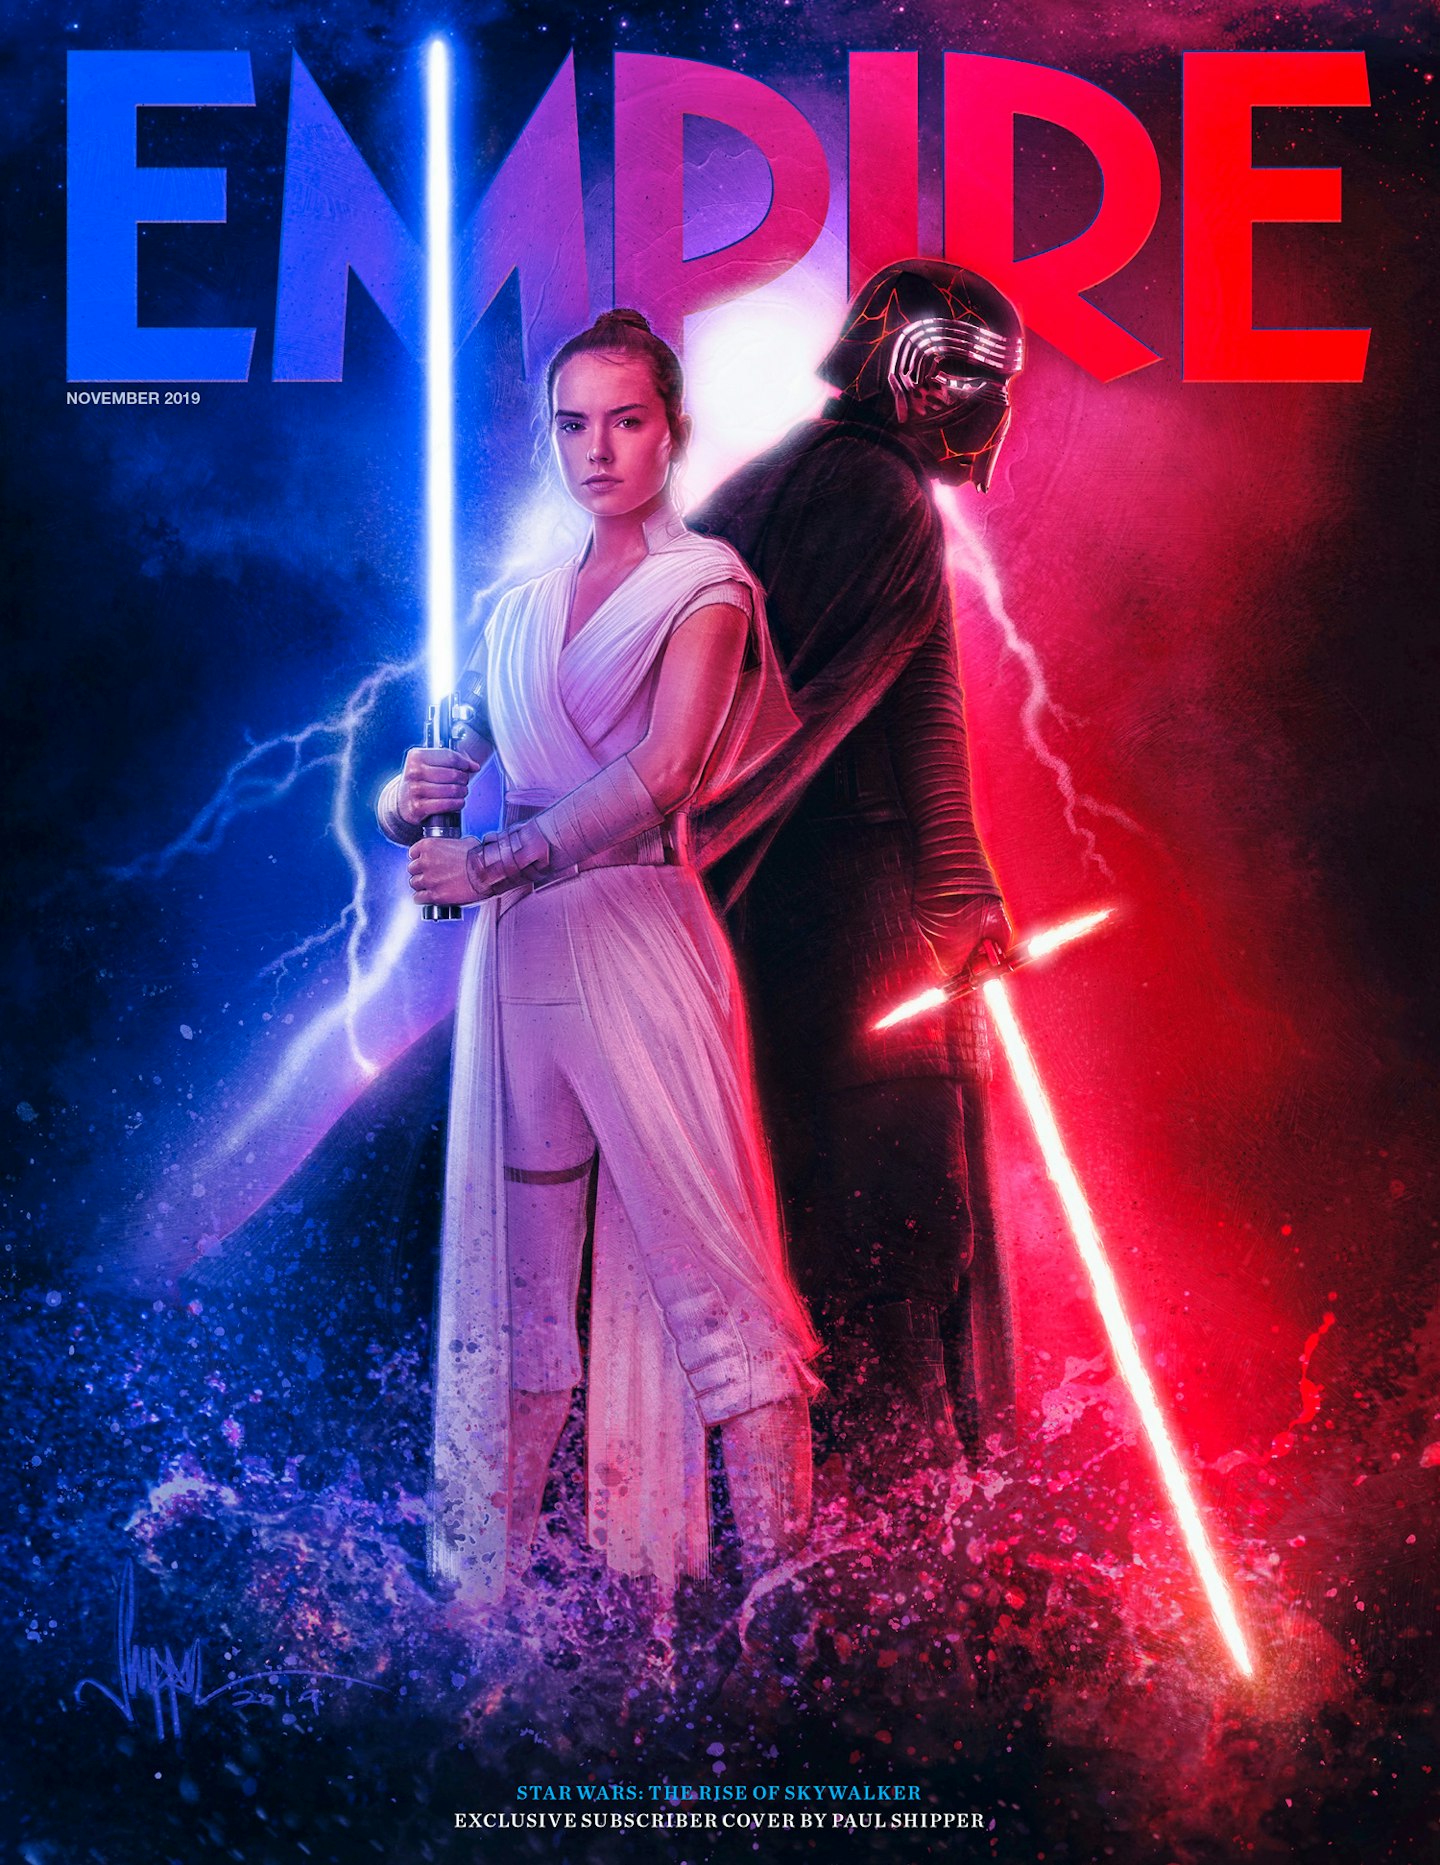 Empire November 2019 – Star Wars Rise Of Skywalker subscriber cover